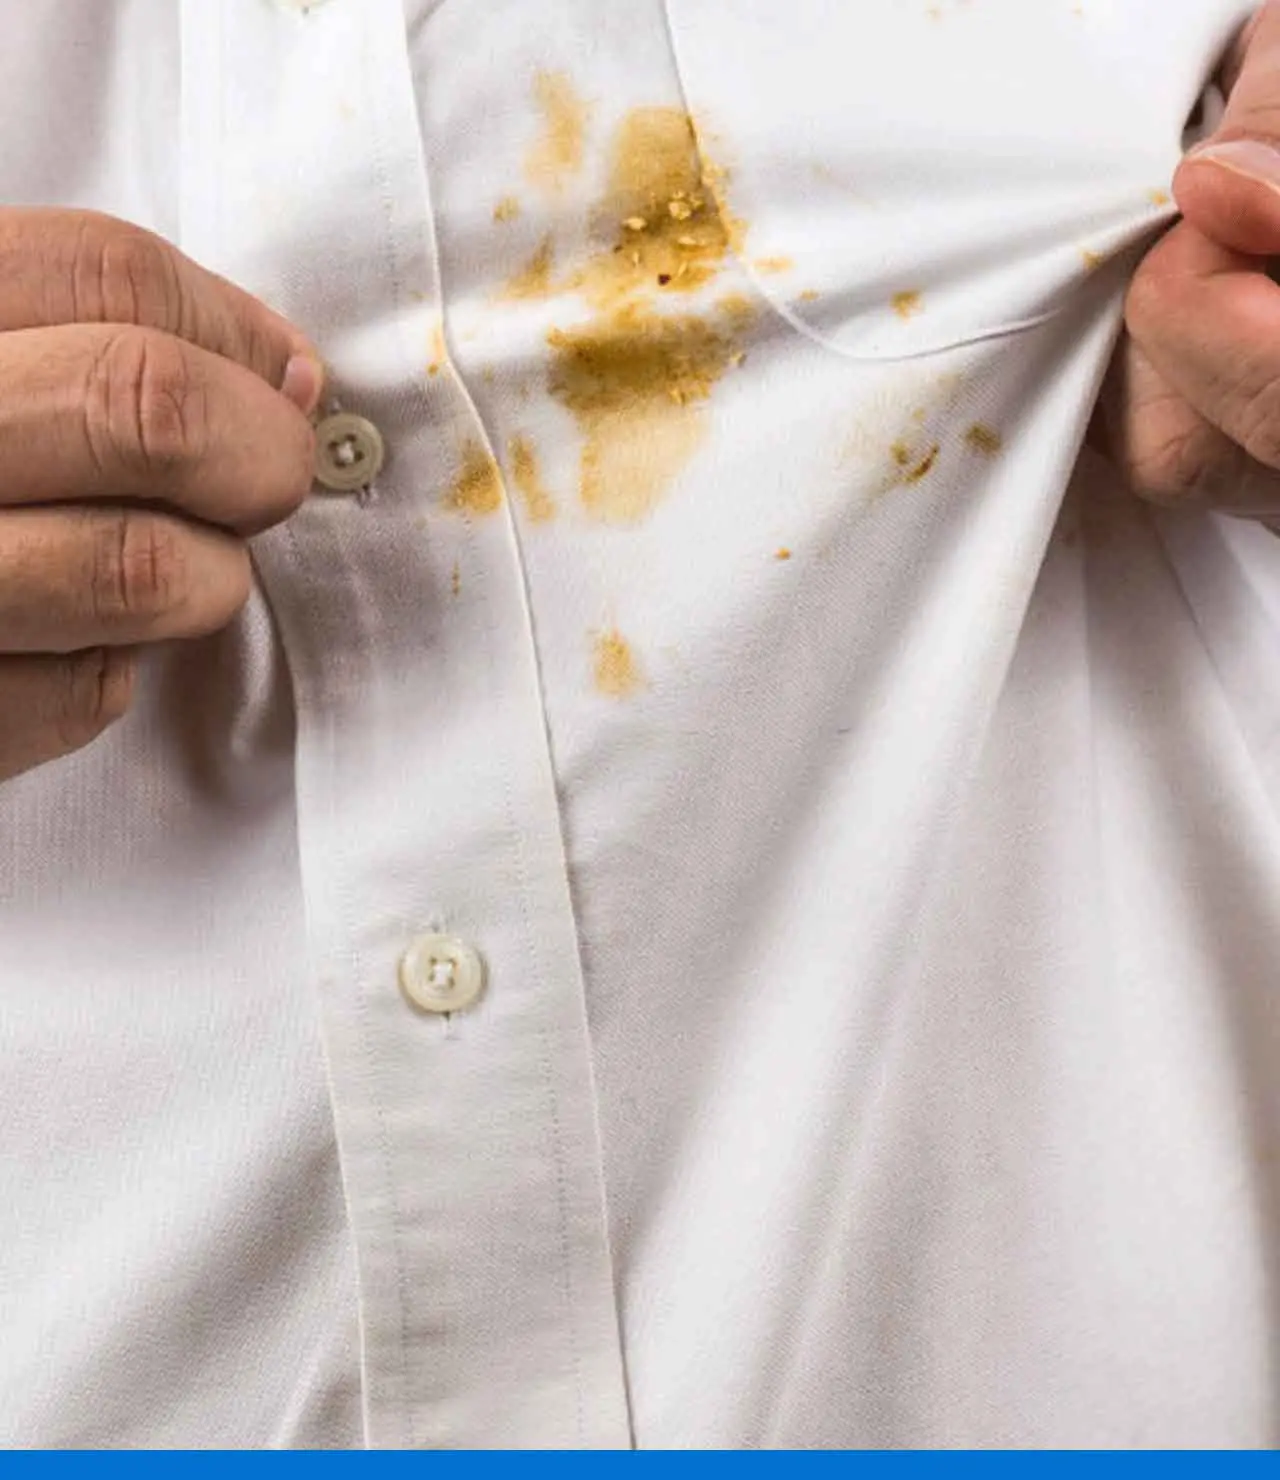 camisa mancha - Cómo se quita la mancha de una camisa